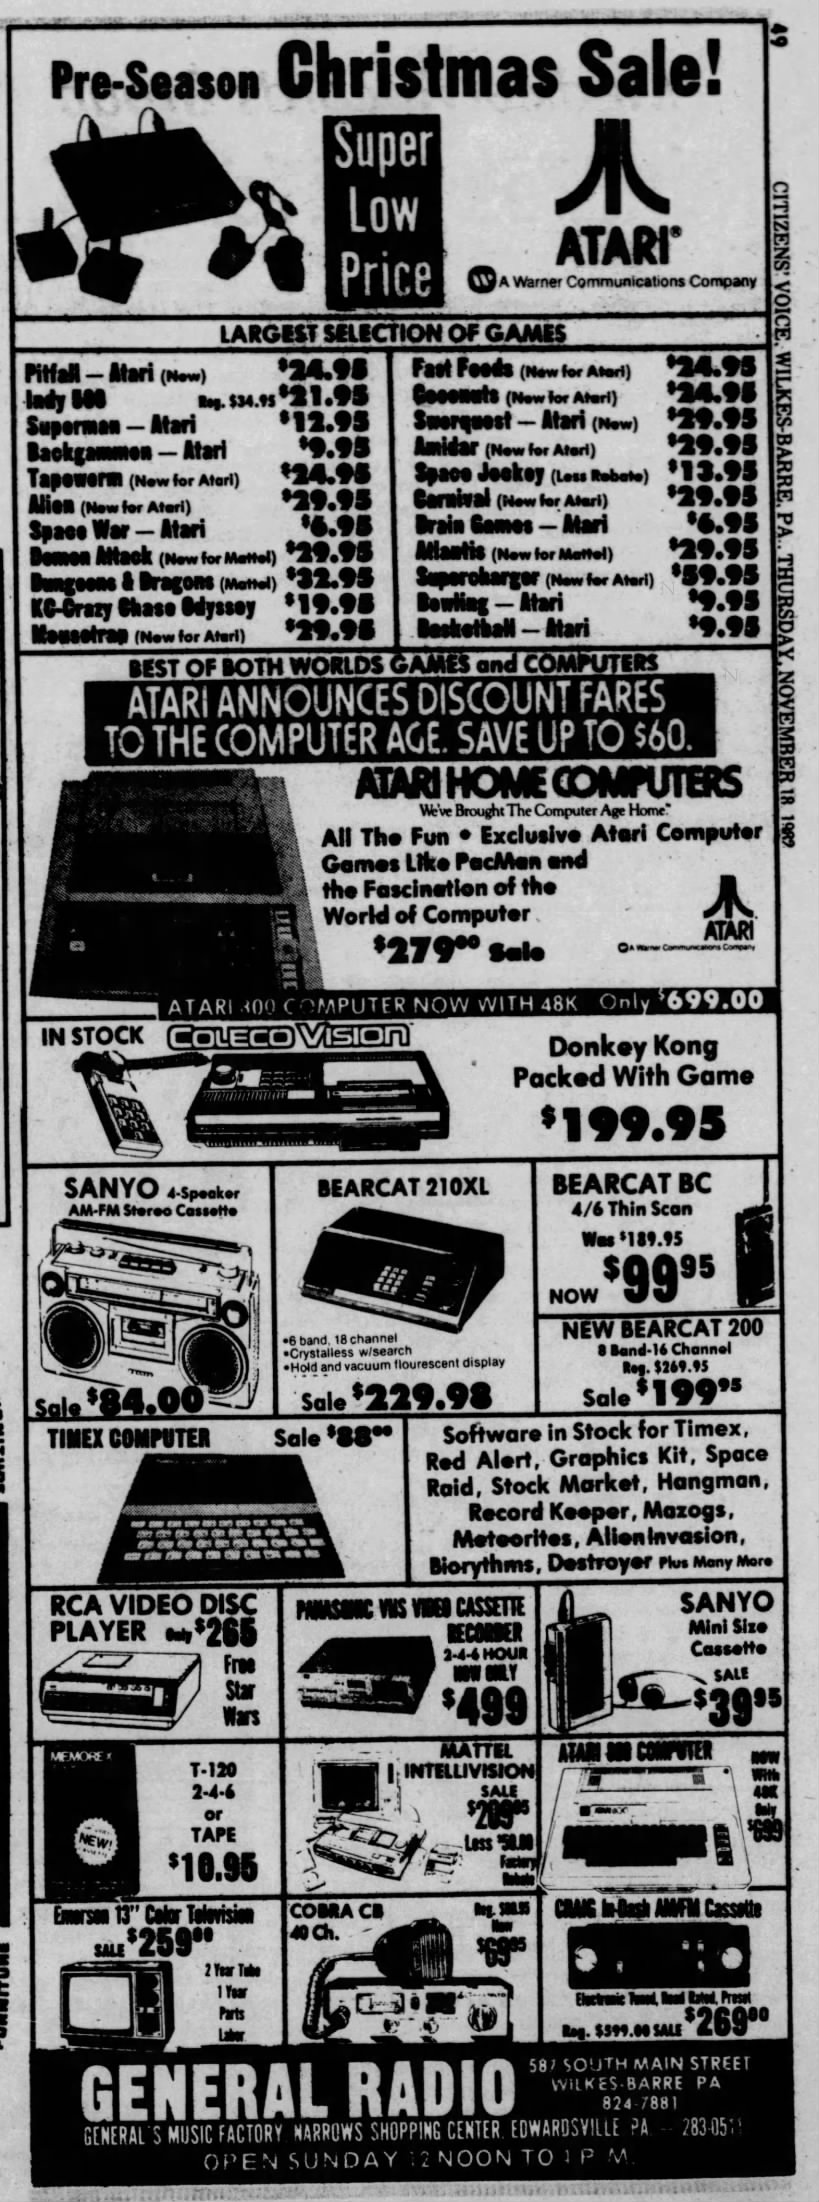 Atari 2600: GENERAL RADIO (Nov 18, 82)